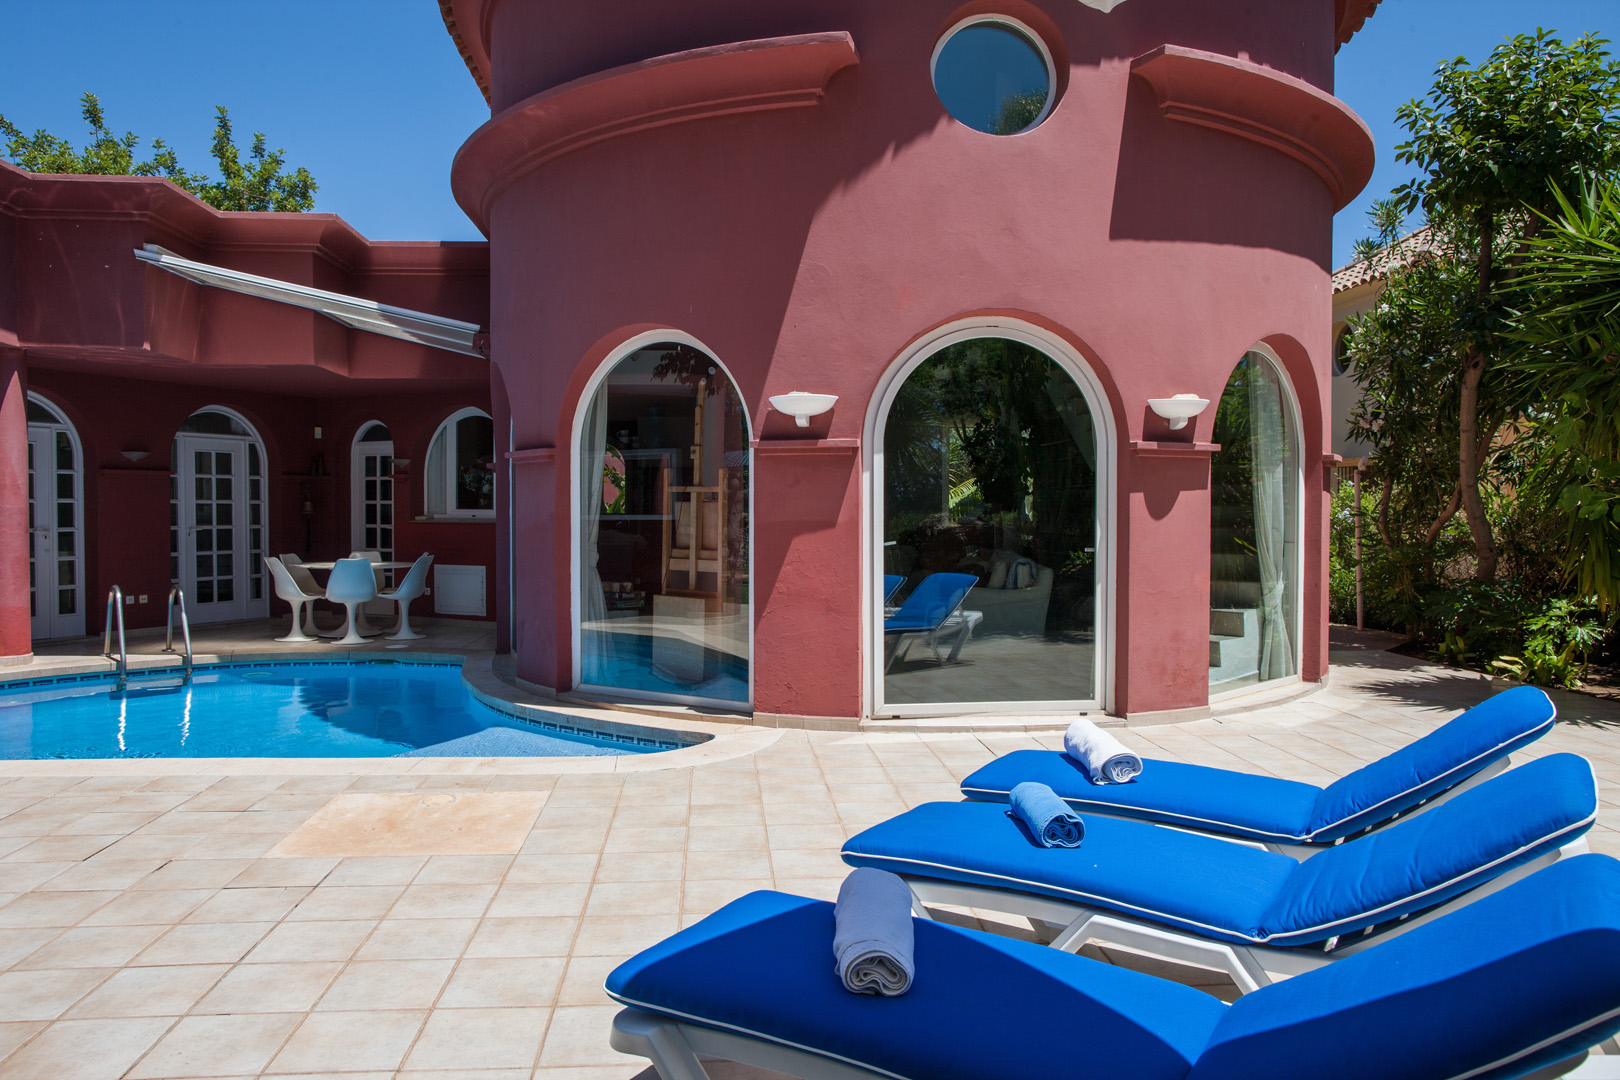 Holiday villa, Costa del Sol, beach and swimming pool